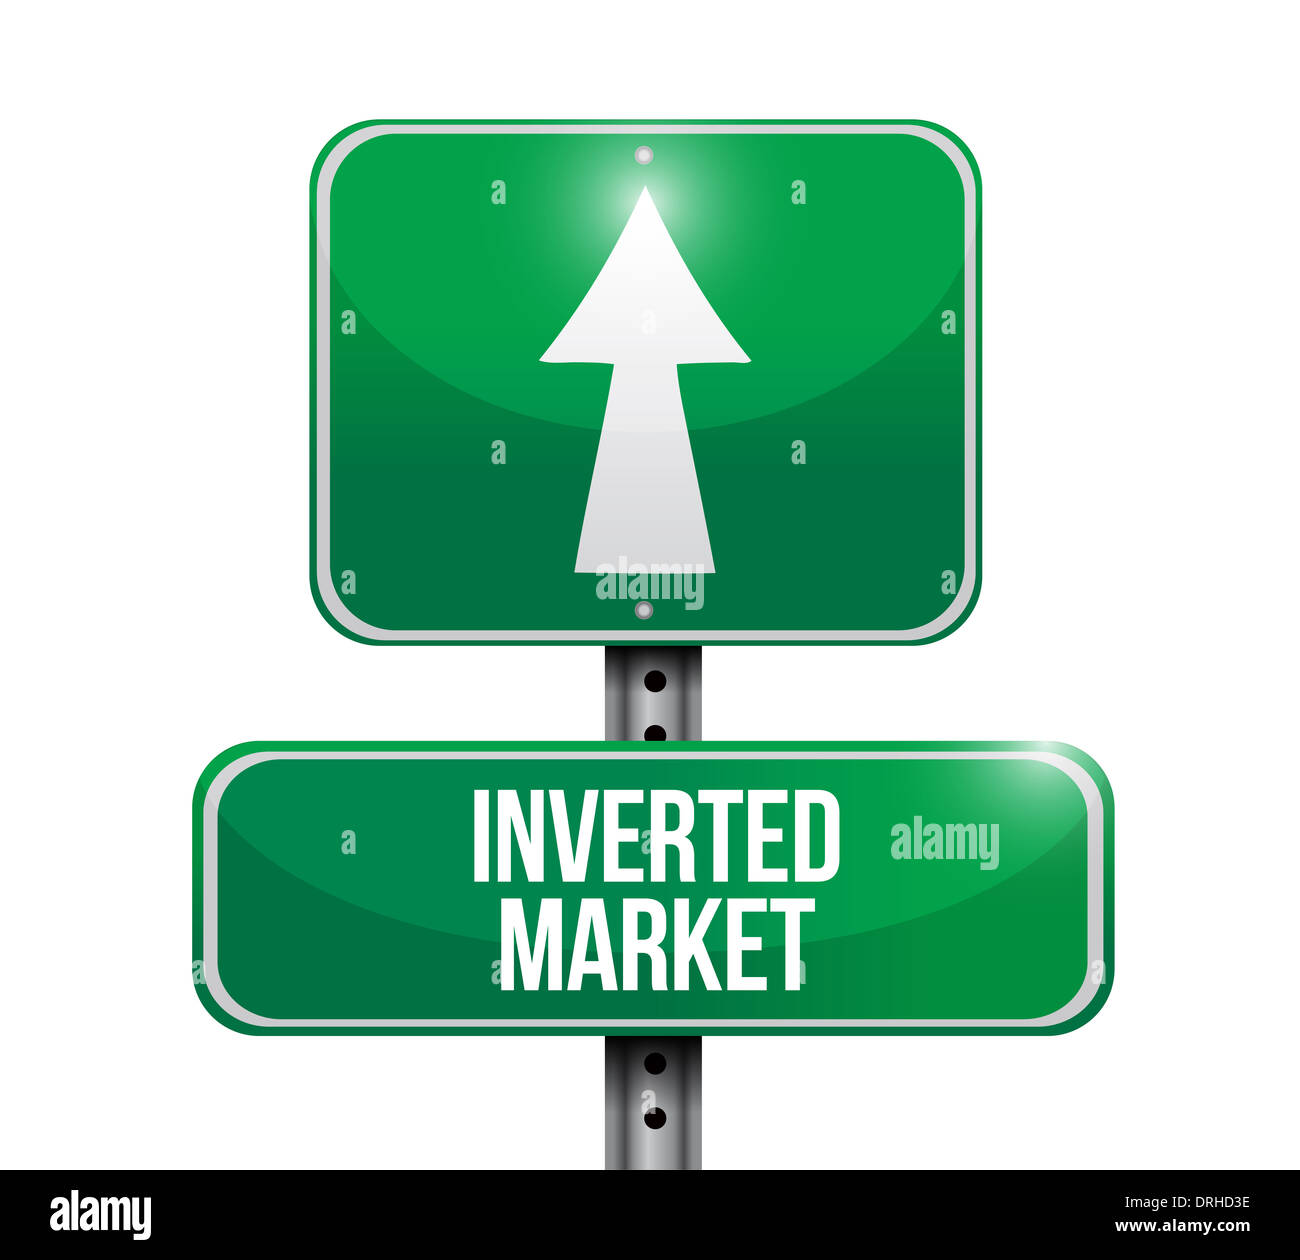 inverted market road sign illustration design over white Stock Photo